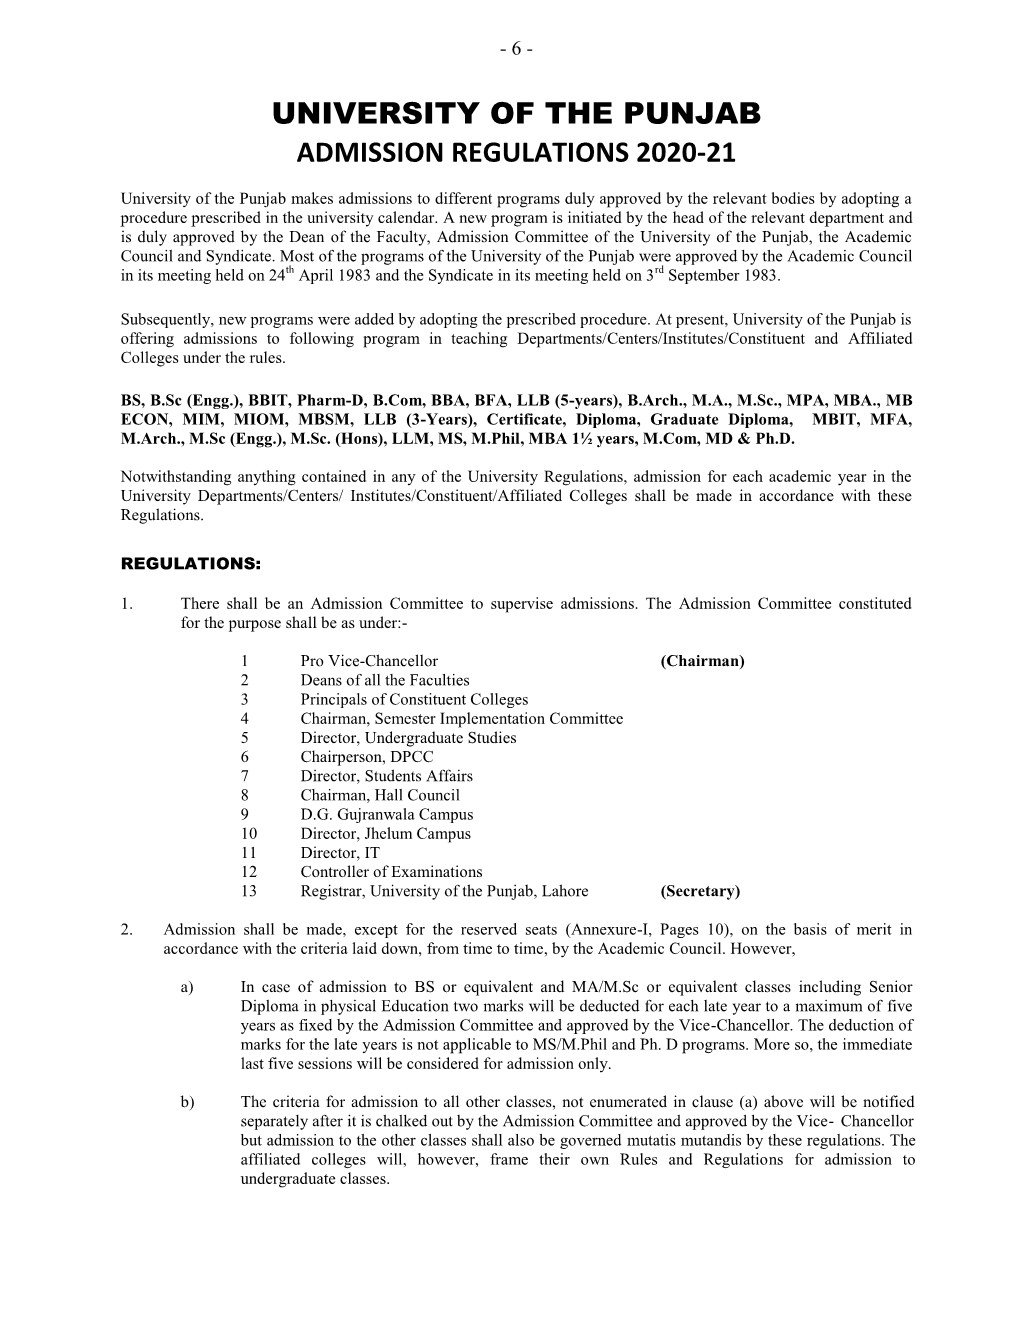 University of the Punjab Admission Regulations 2020-21